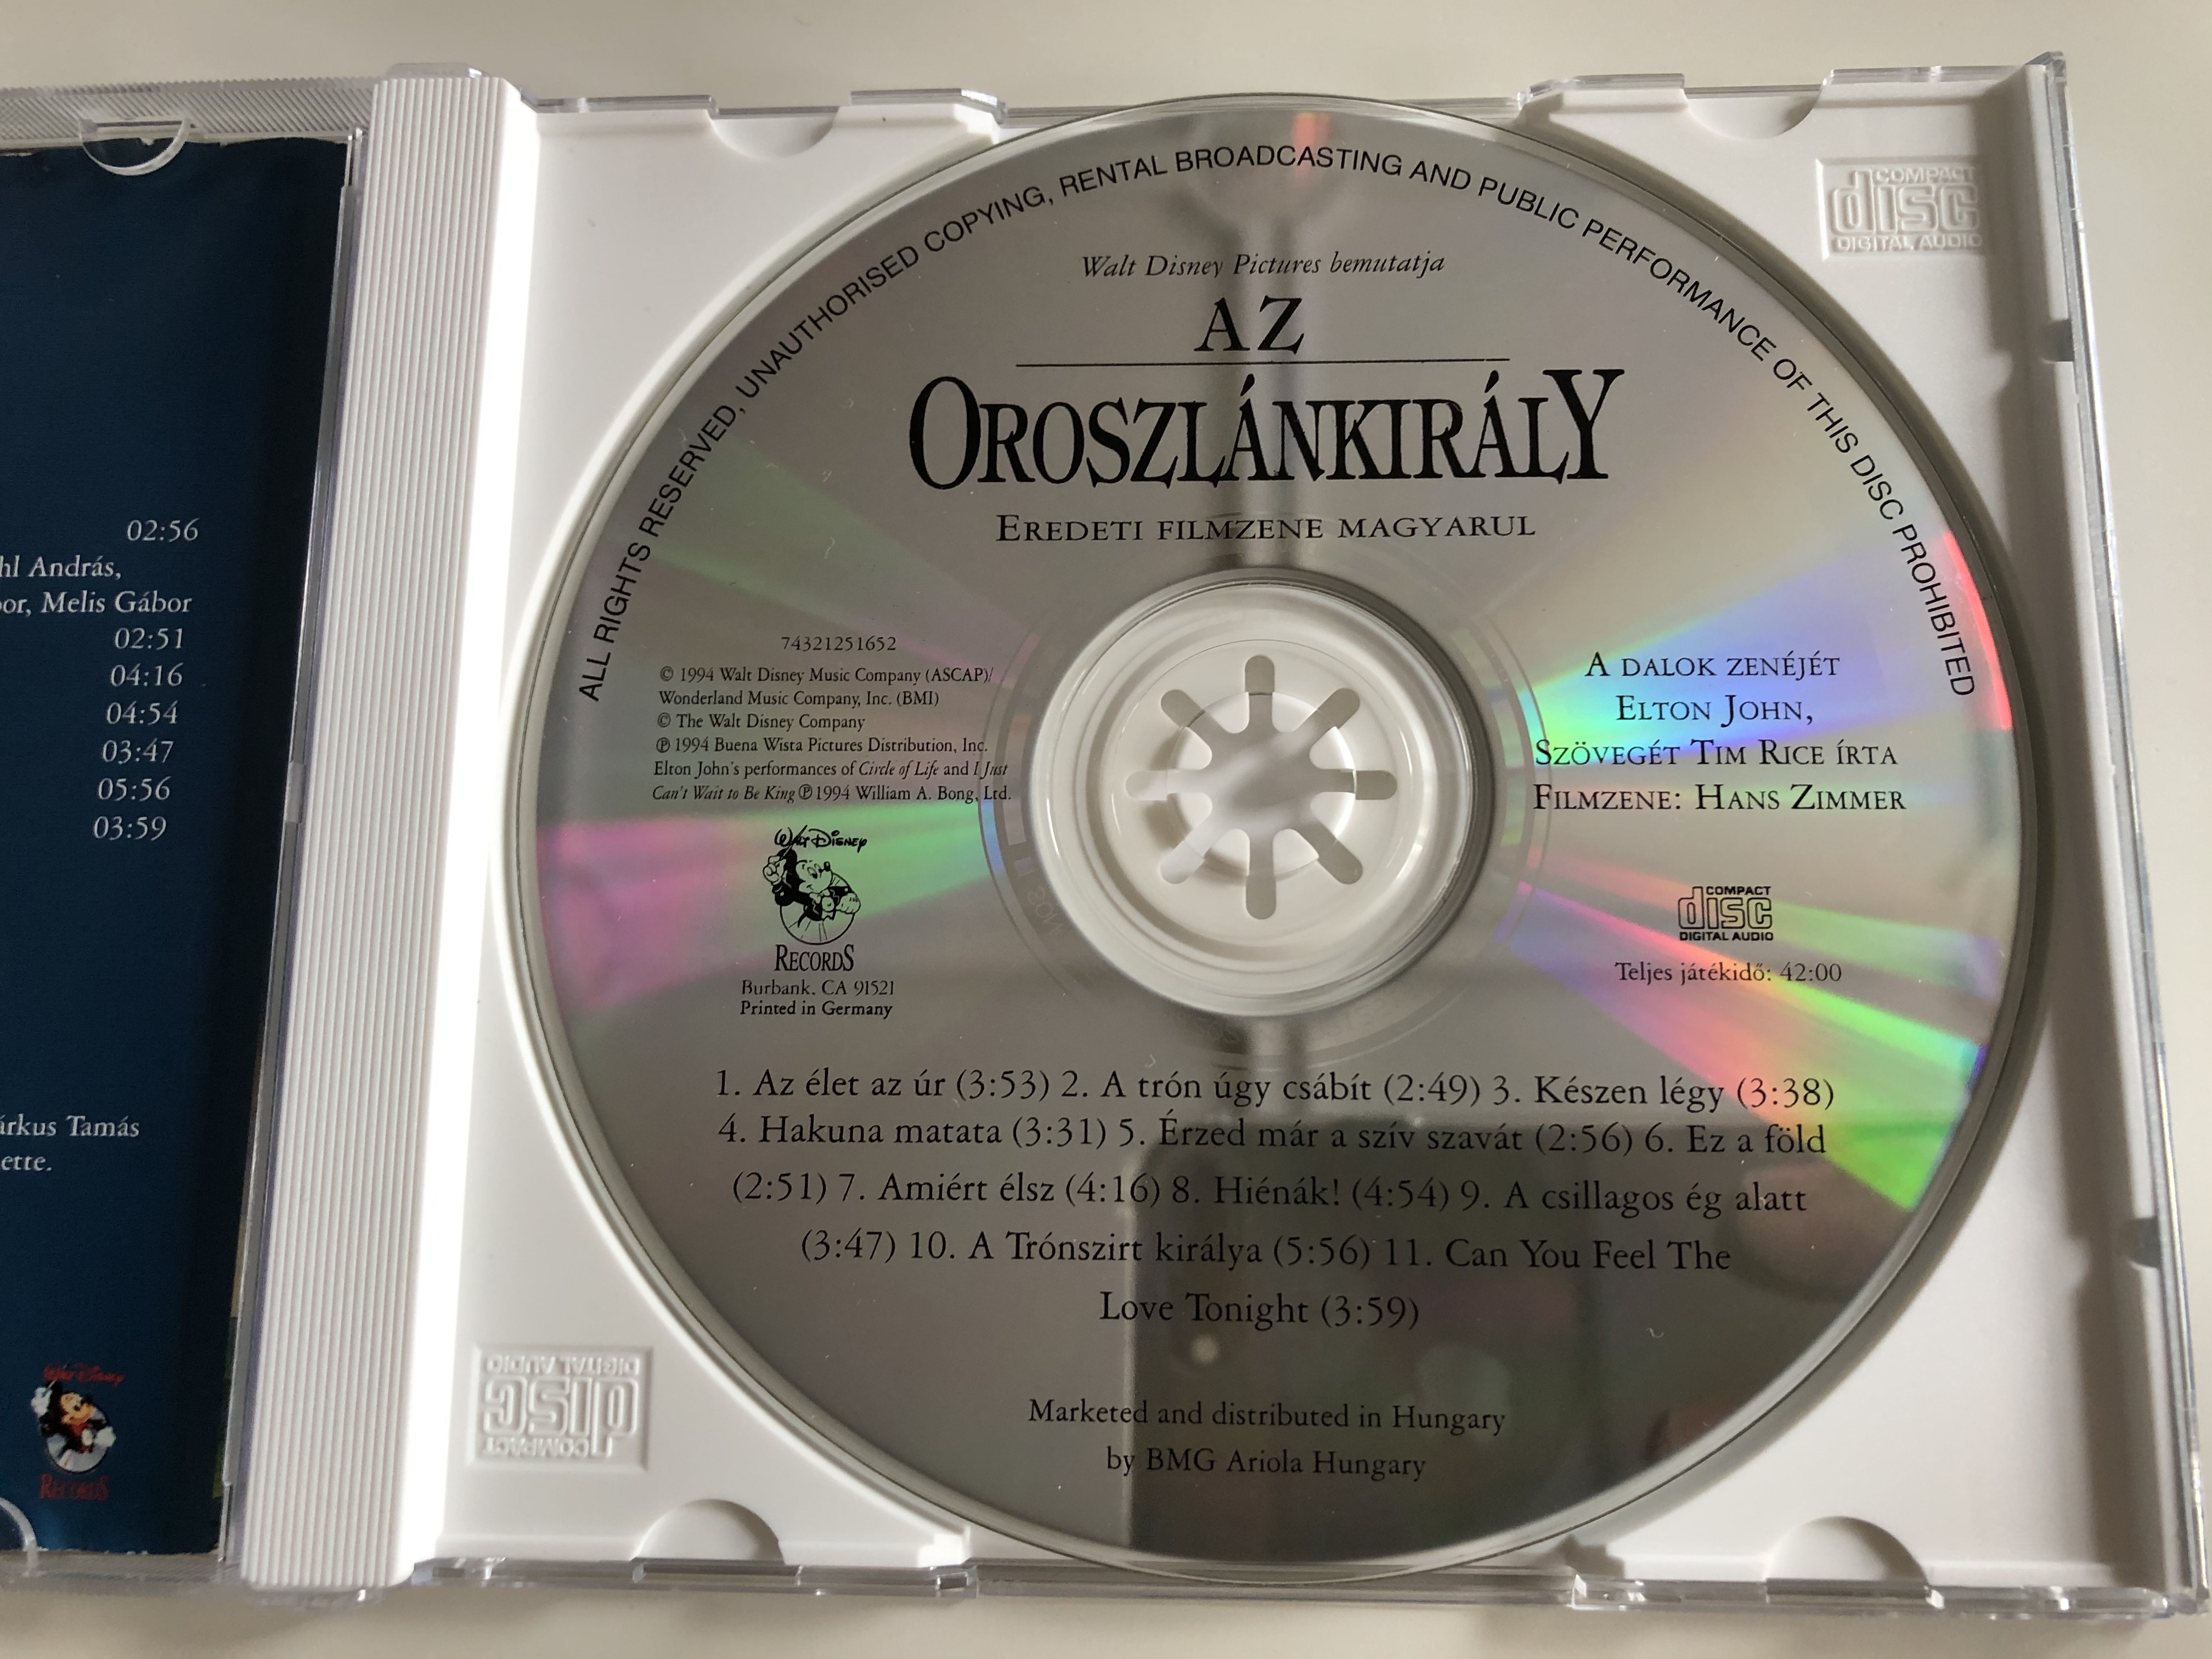 az-oroszl-nkir-ly-eredeti-filmzene-magyarul-a-dalok-zenejet-elton-john-szoveget-tim-rice-irta-filmzene-hans-zimmer-walt-disney-records-audio-cd-1994-74321251652-4-.jpg